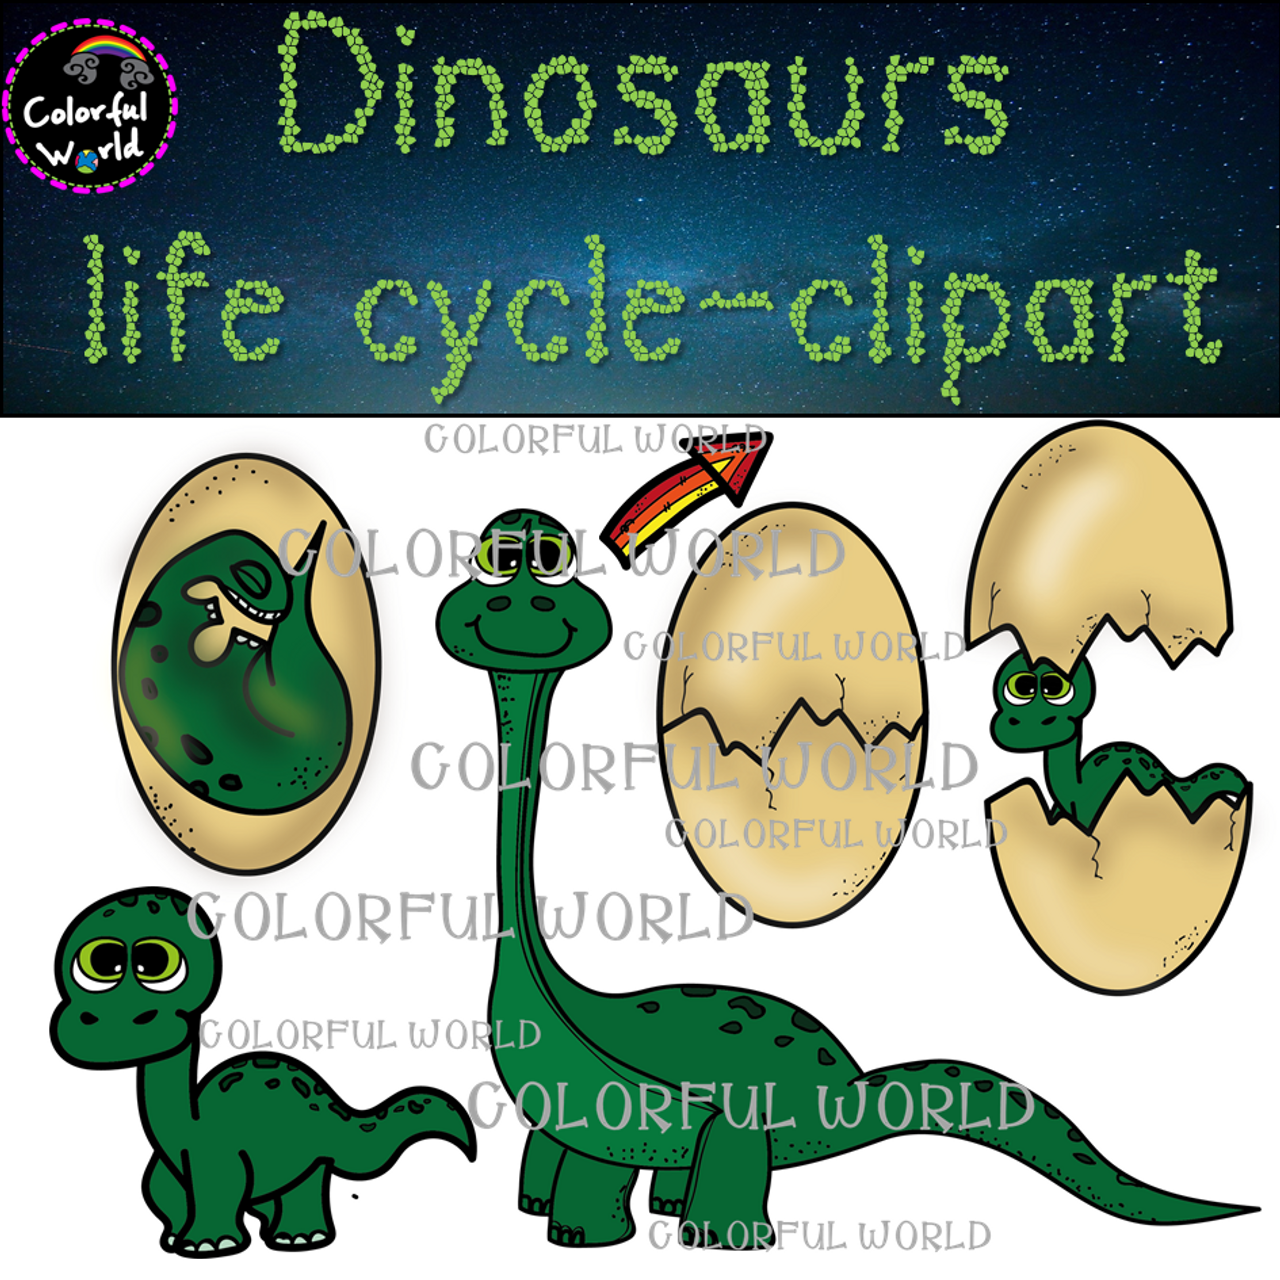 Dinosaur eggs in your backyard - Rosie Research